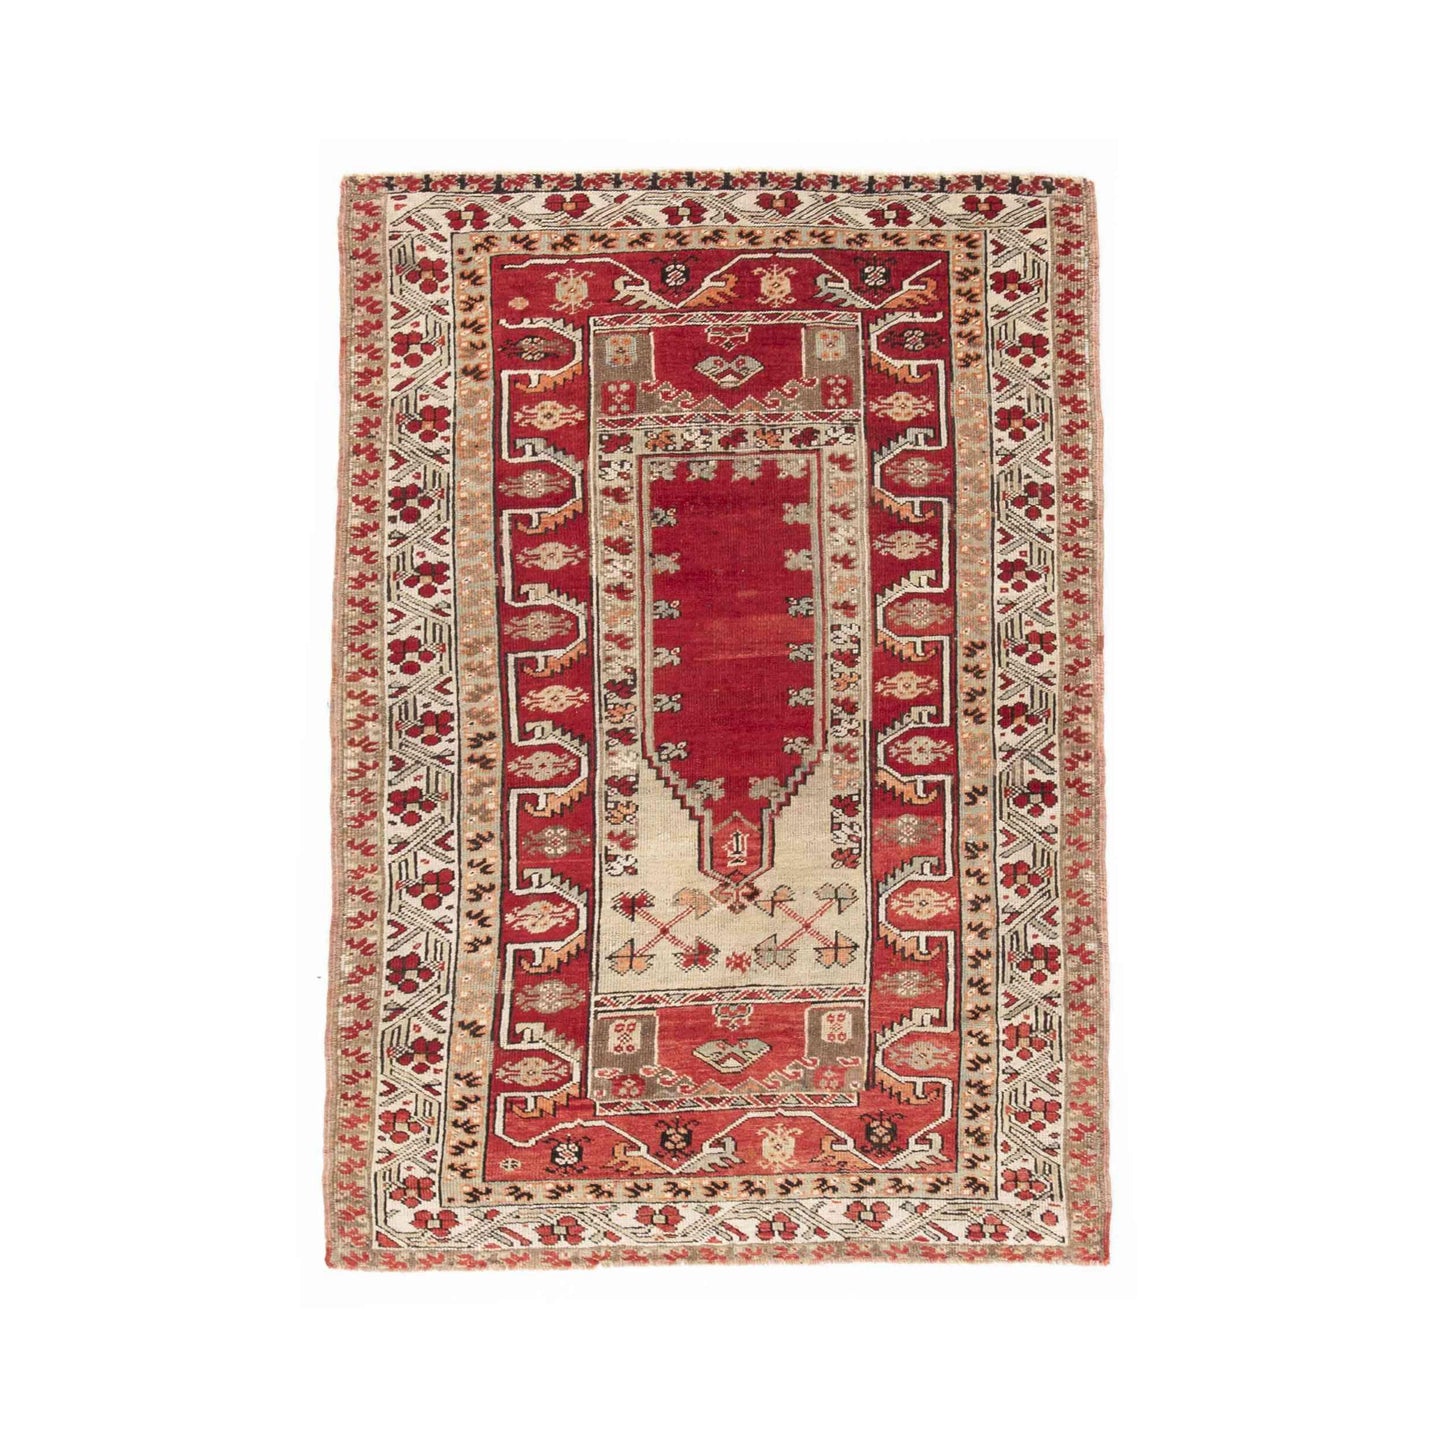 Oriental Rug Anatolian Handwoven Wool On Wool 108 x 165 Cm - 3' 7'' x 5' 5'' Red C014 ER01